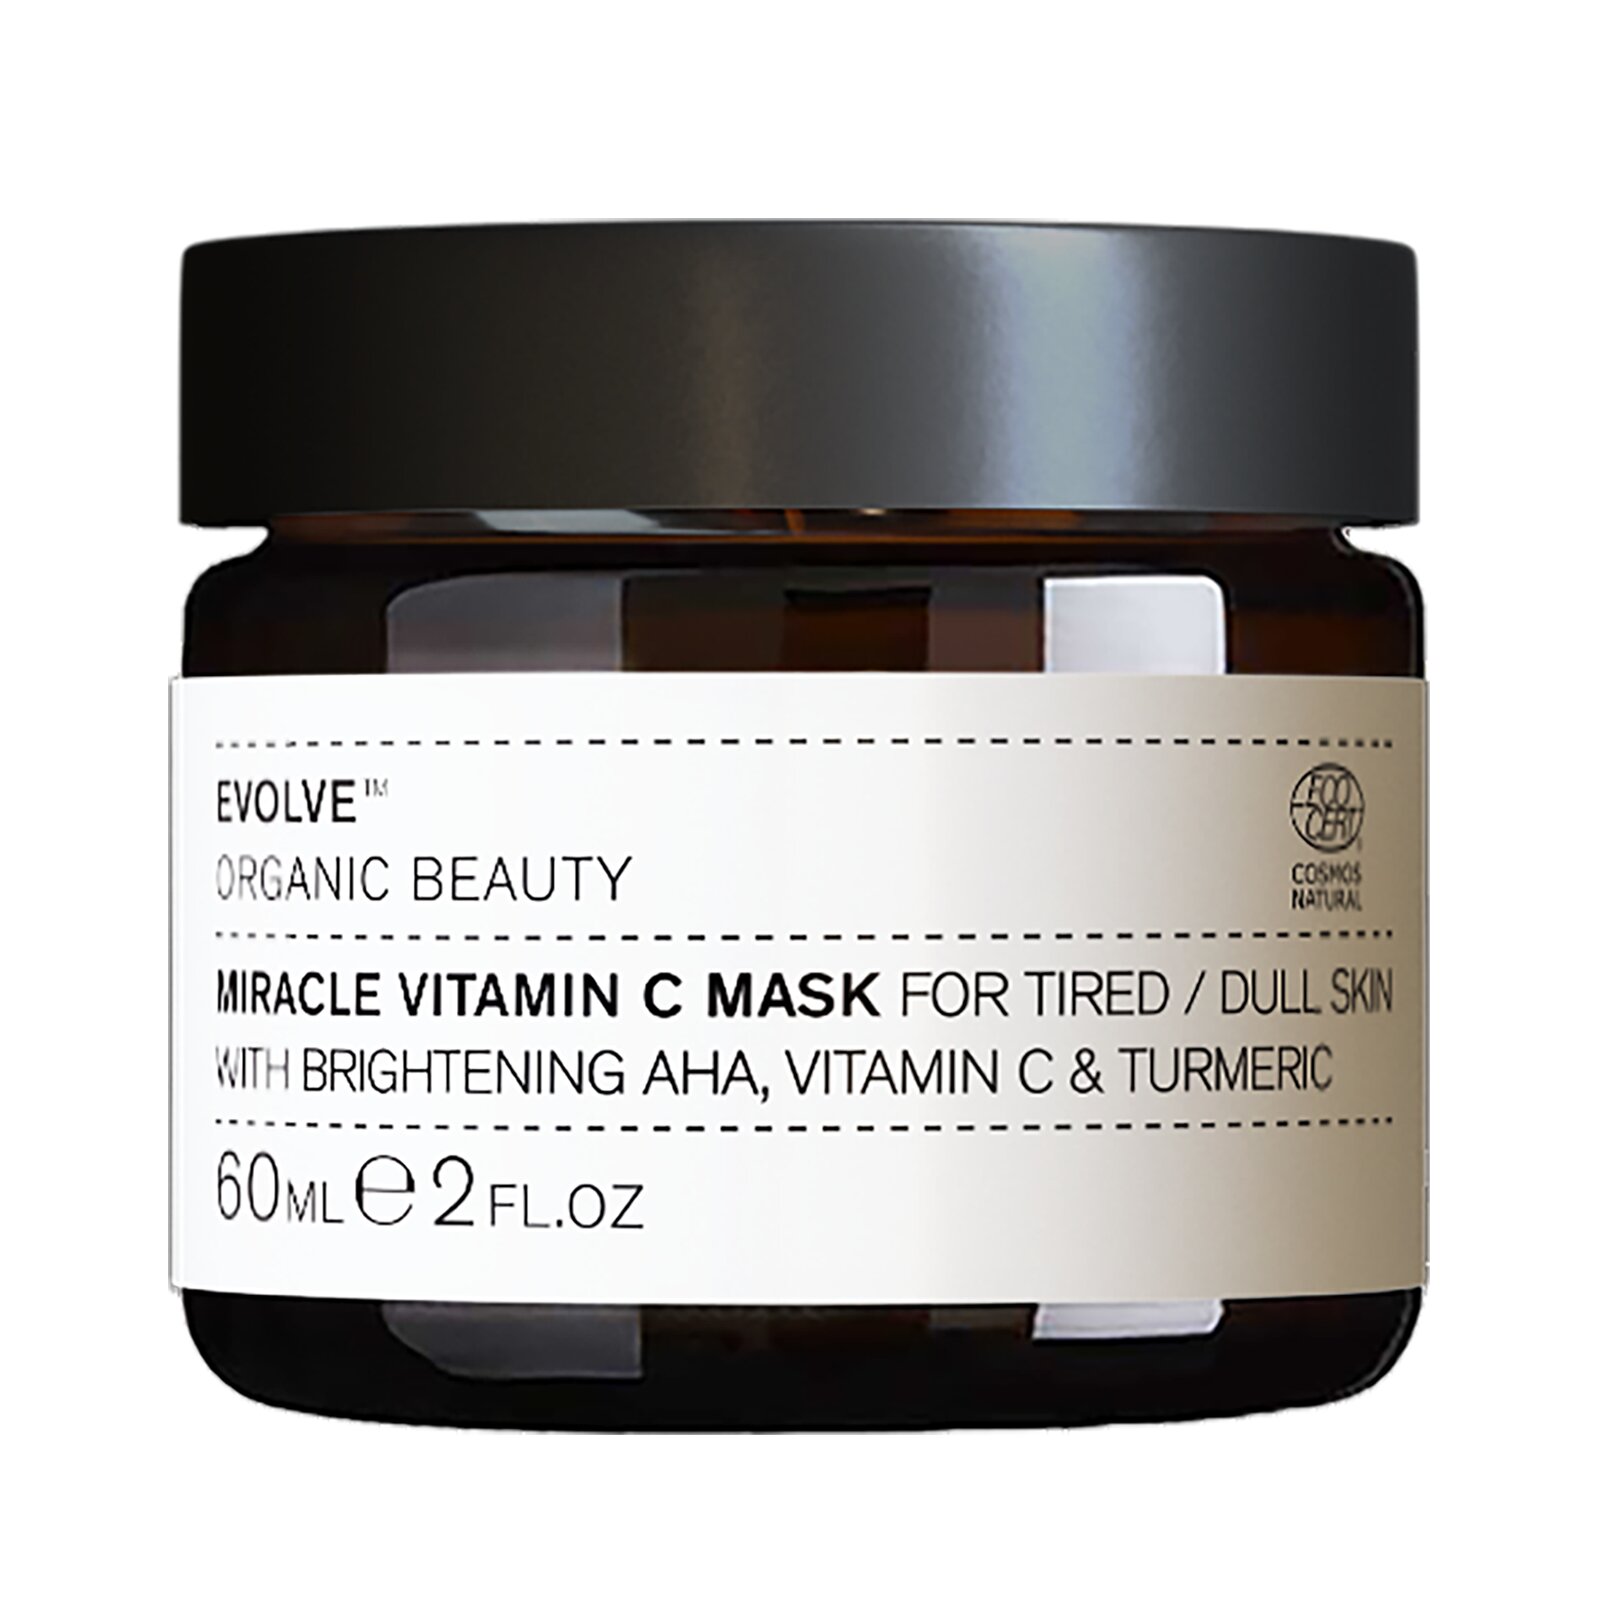 Evolve Miracle Vitamin C Mask